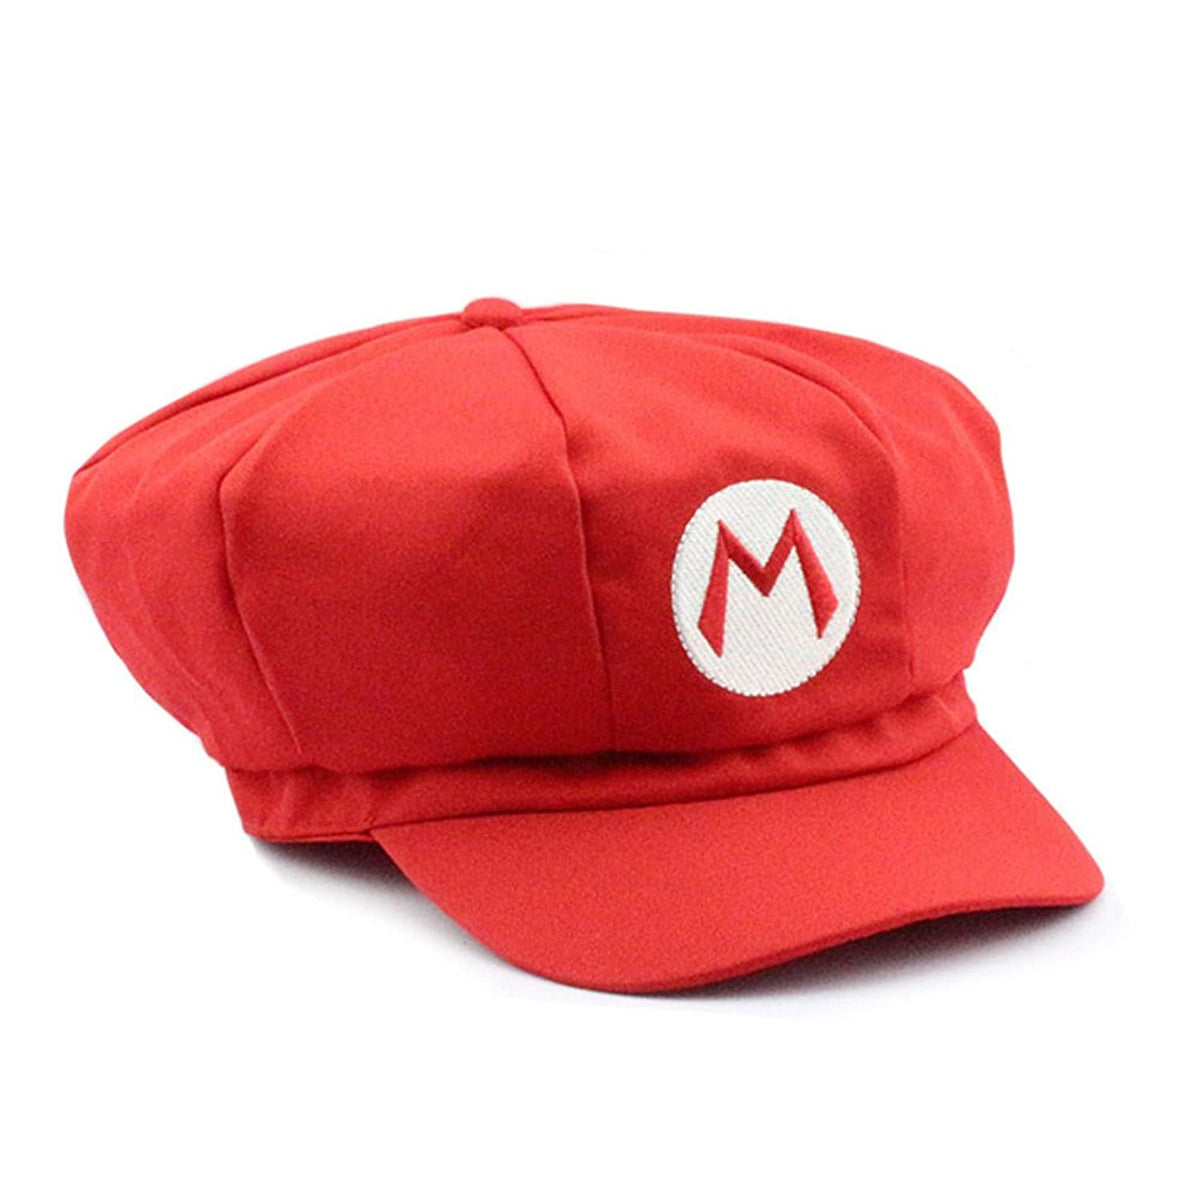 Mario Luigi Wario Waluigi Fire Mario Embroidered Costume Newsboy Hat - Red